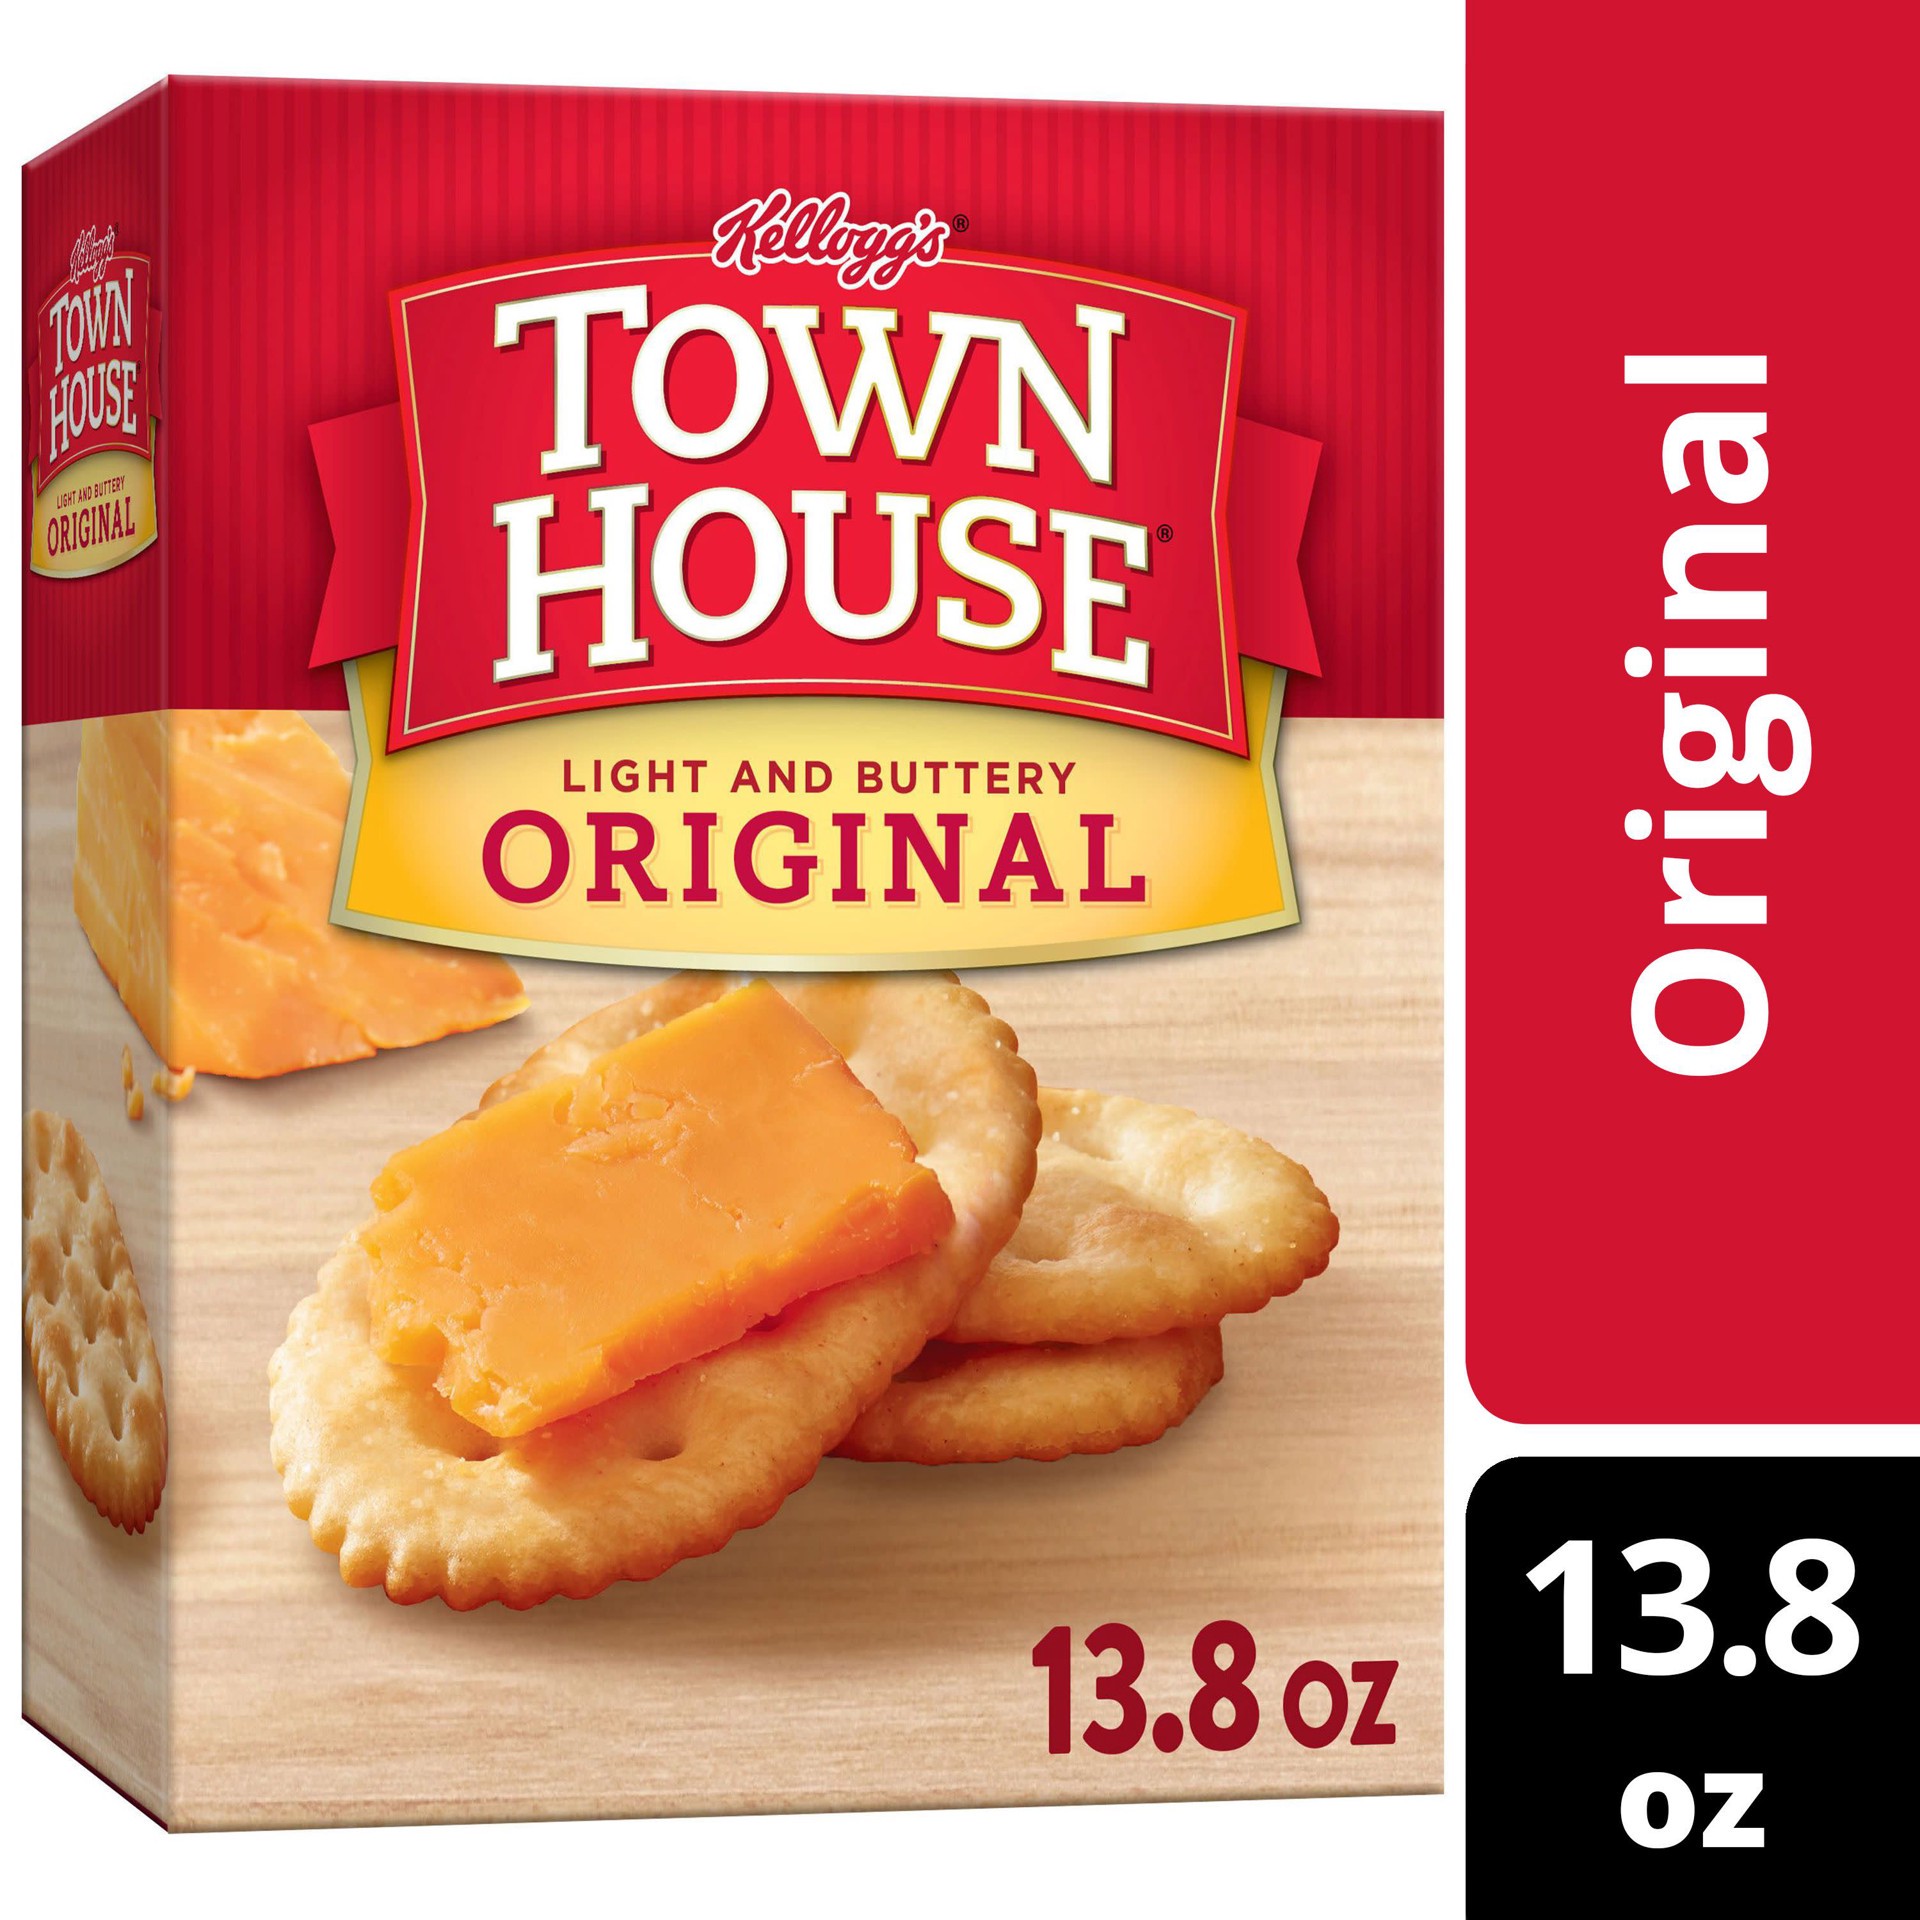 slide 1 of 101, Town House Kellogg's Town House Original Snack Crackers - 13.8oz, 13.8 oz